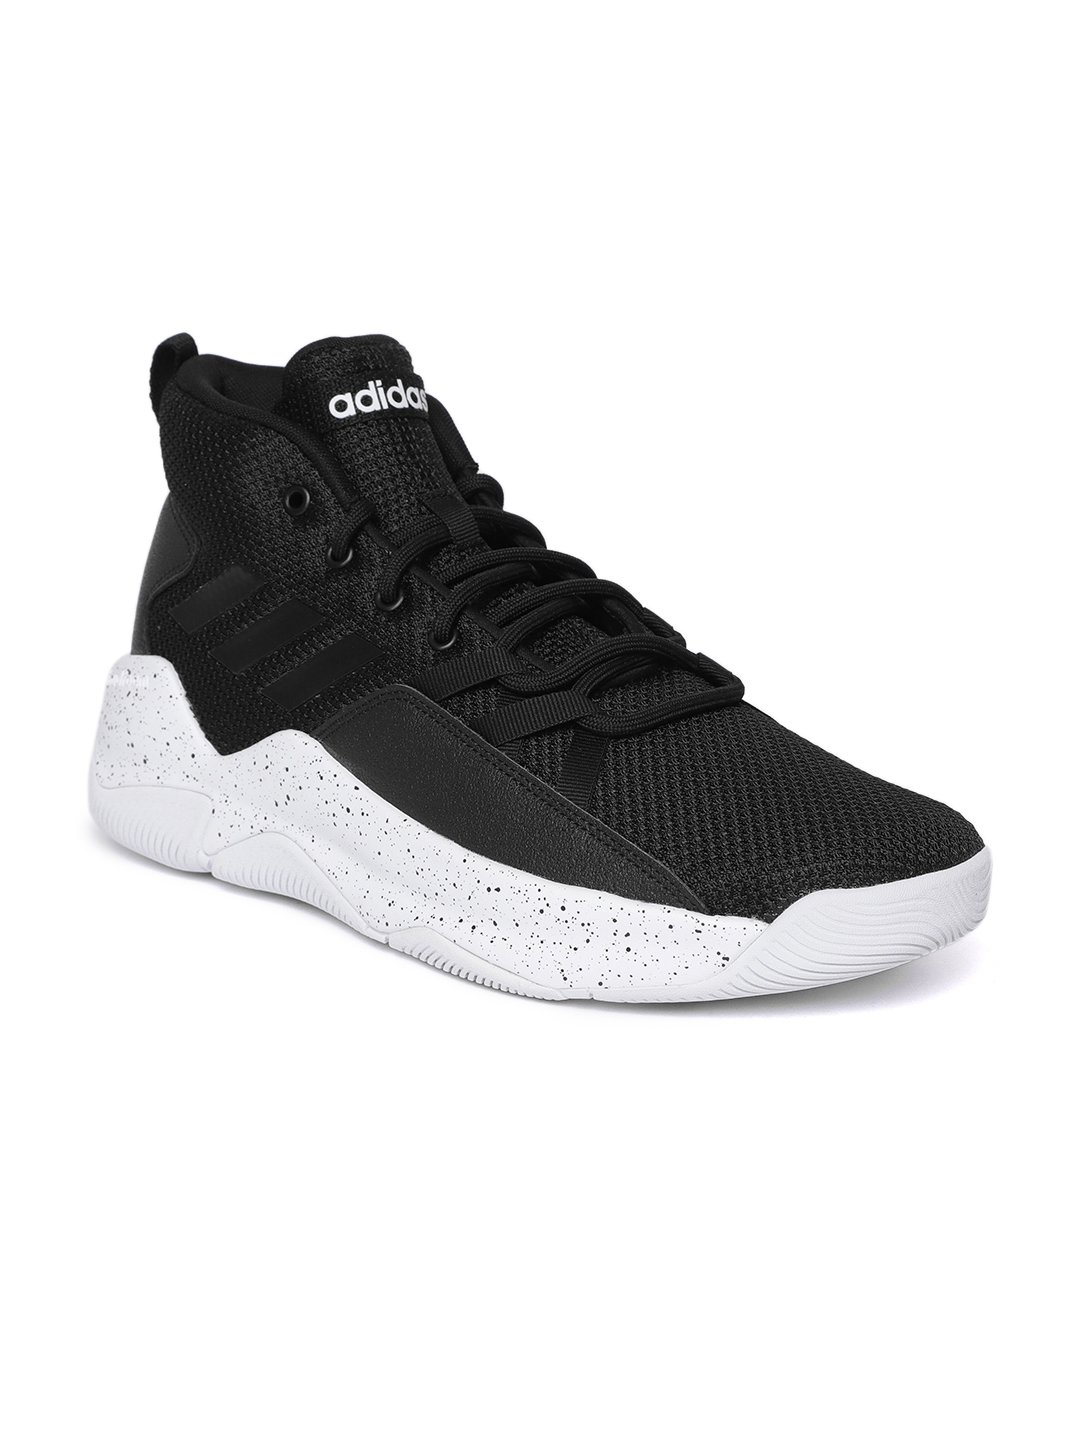 adidas streetfire black basketball shoes